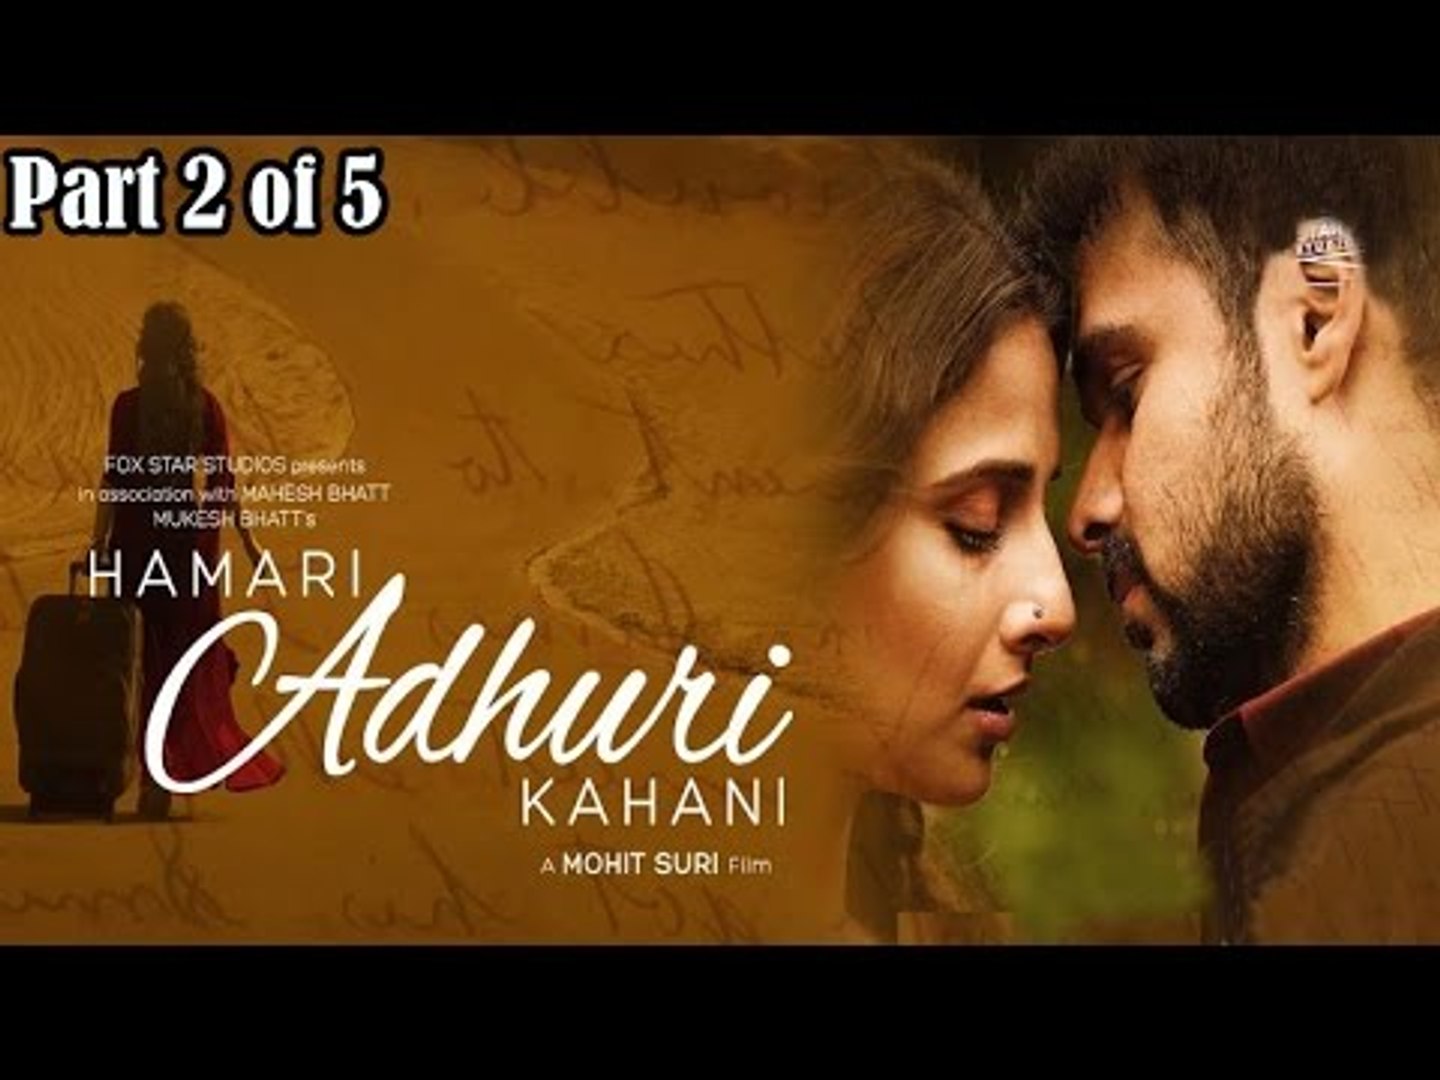 hamari adhuri kahani full movie hd 1080p download free